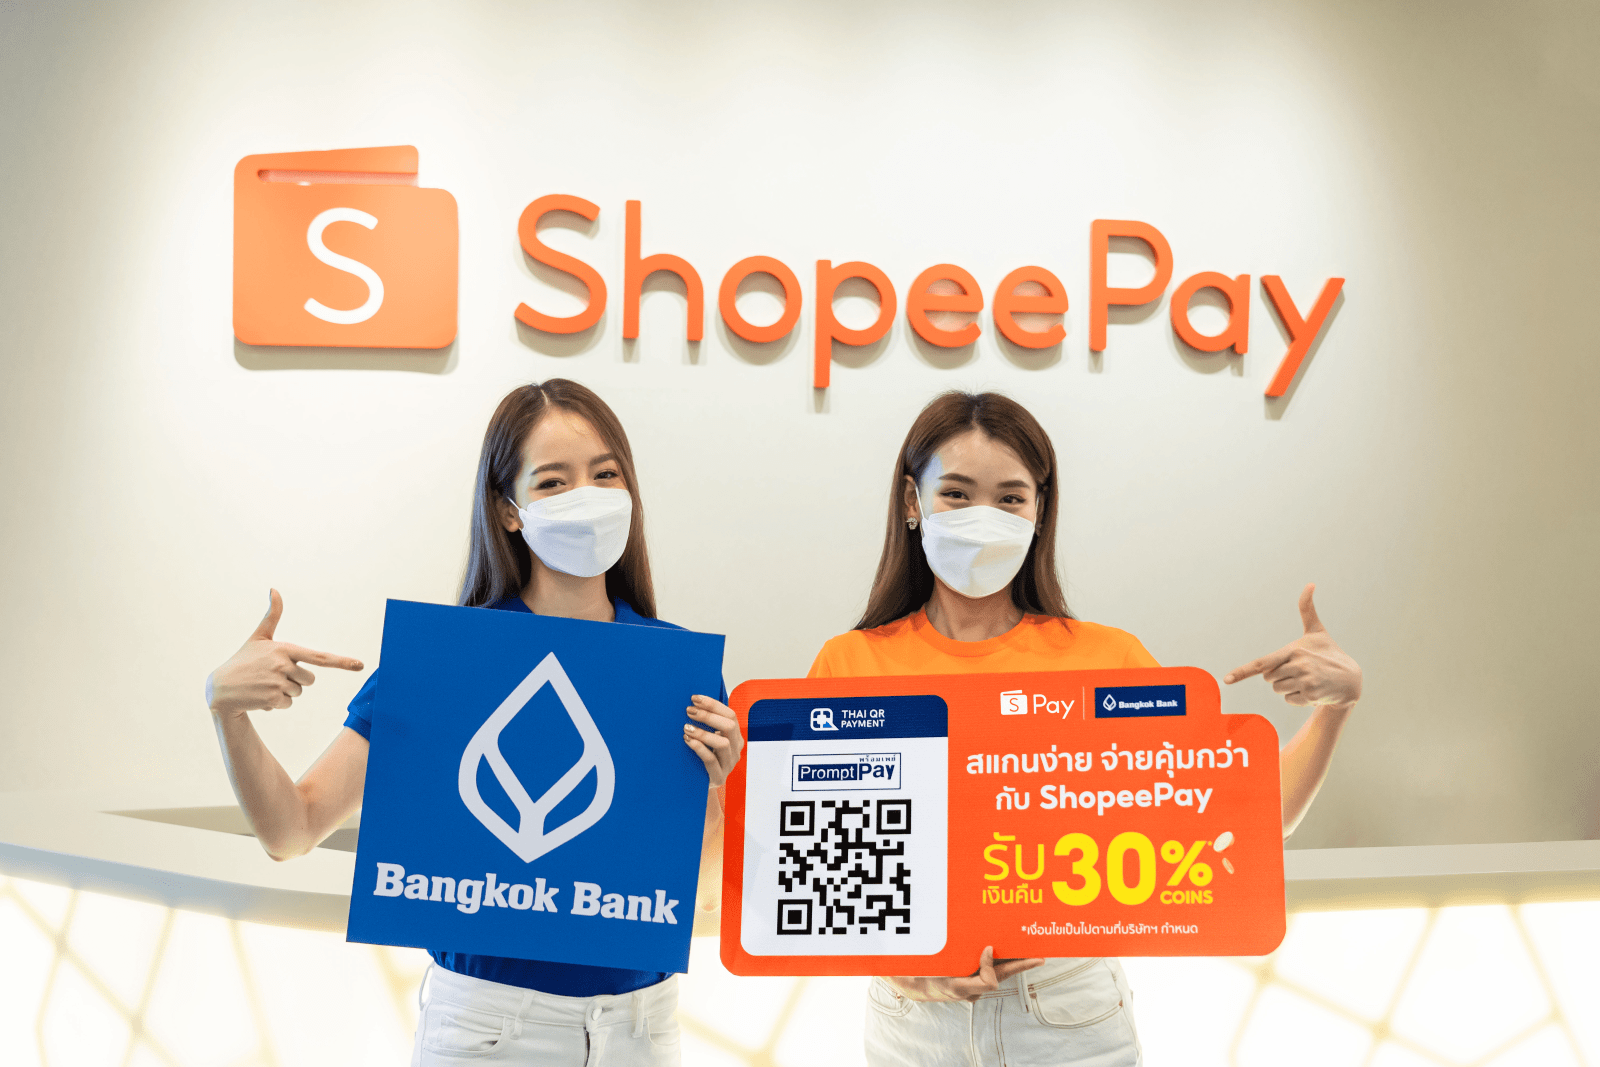 ‘ShopeePay’ จับมือ ‘ธนาคารกรุงเทพ’ เพิ่มช่องทางเลือกการชำระเงิน เปิดบริการใหม่ ‘PromptPay Sponsor Bank’ (สแกนพร้อมเพย์)